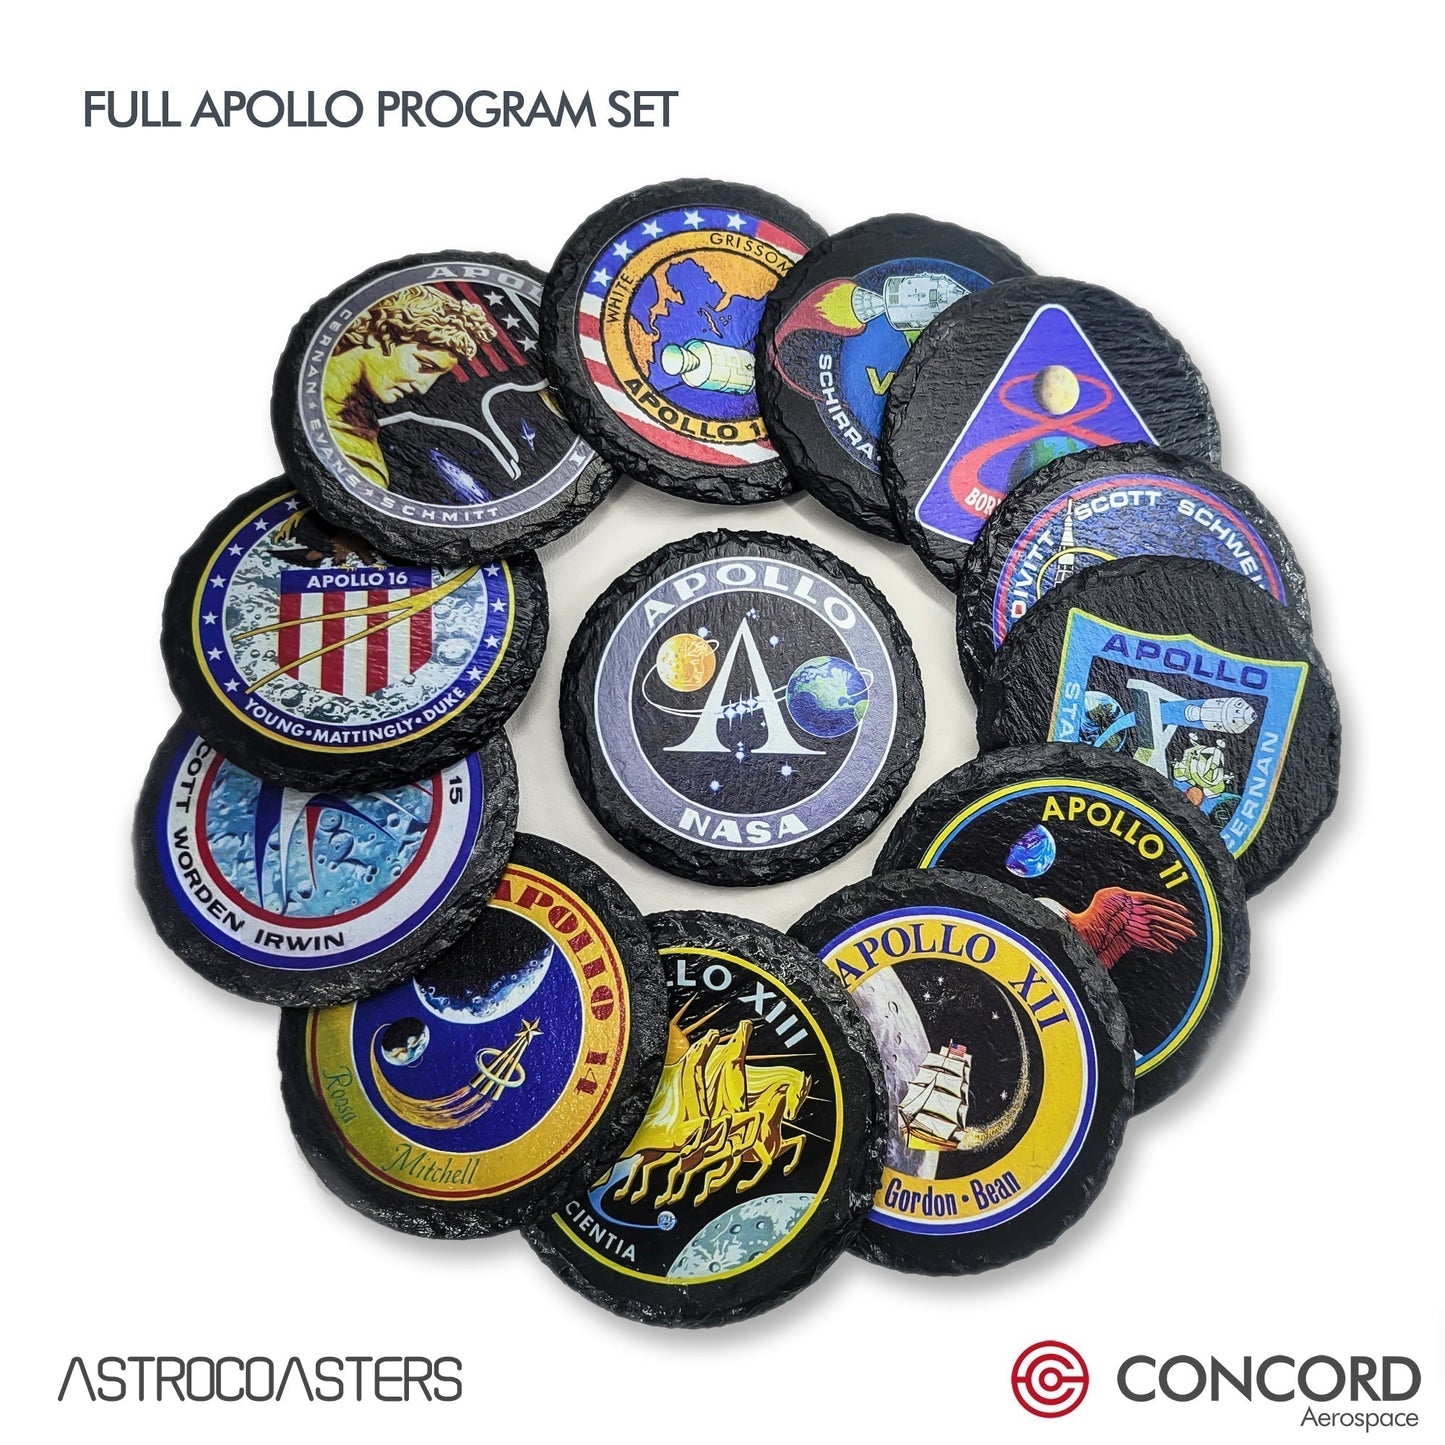 THE MOON - SLATE COASTER - Concord Aerospace Concord Aerospace Concord Aerospace Coasters